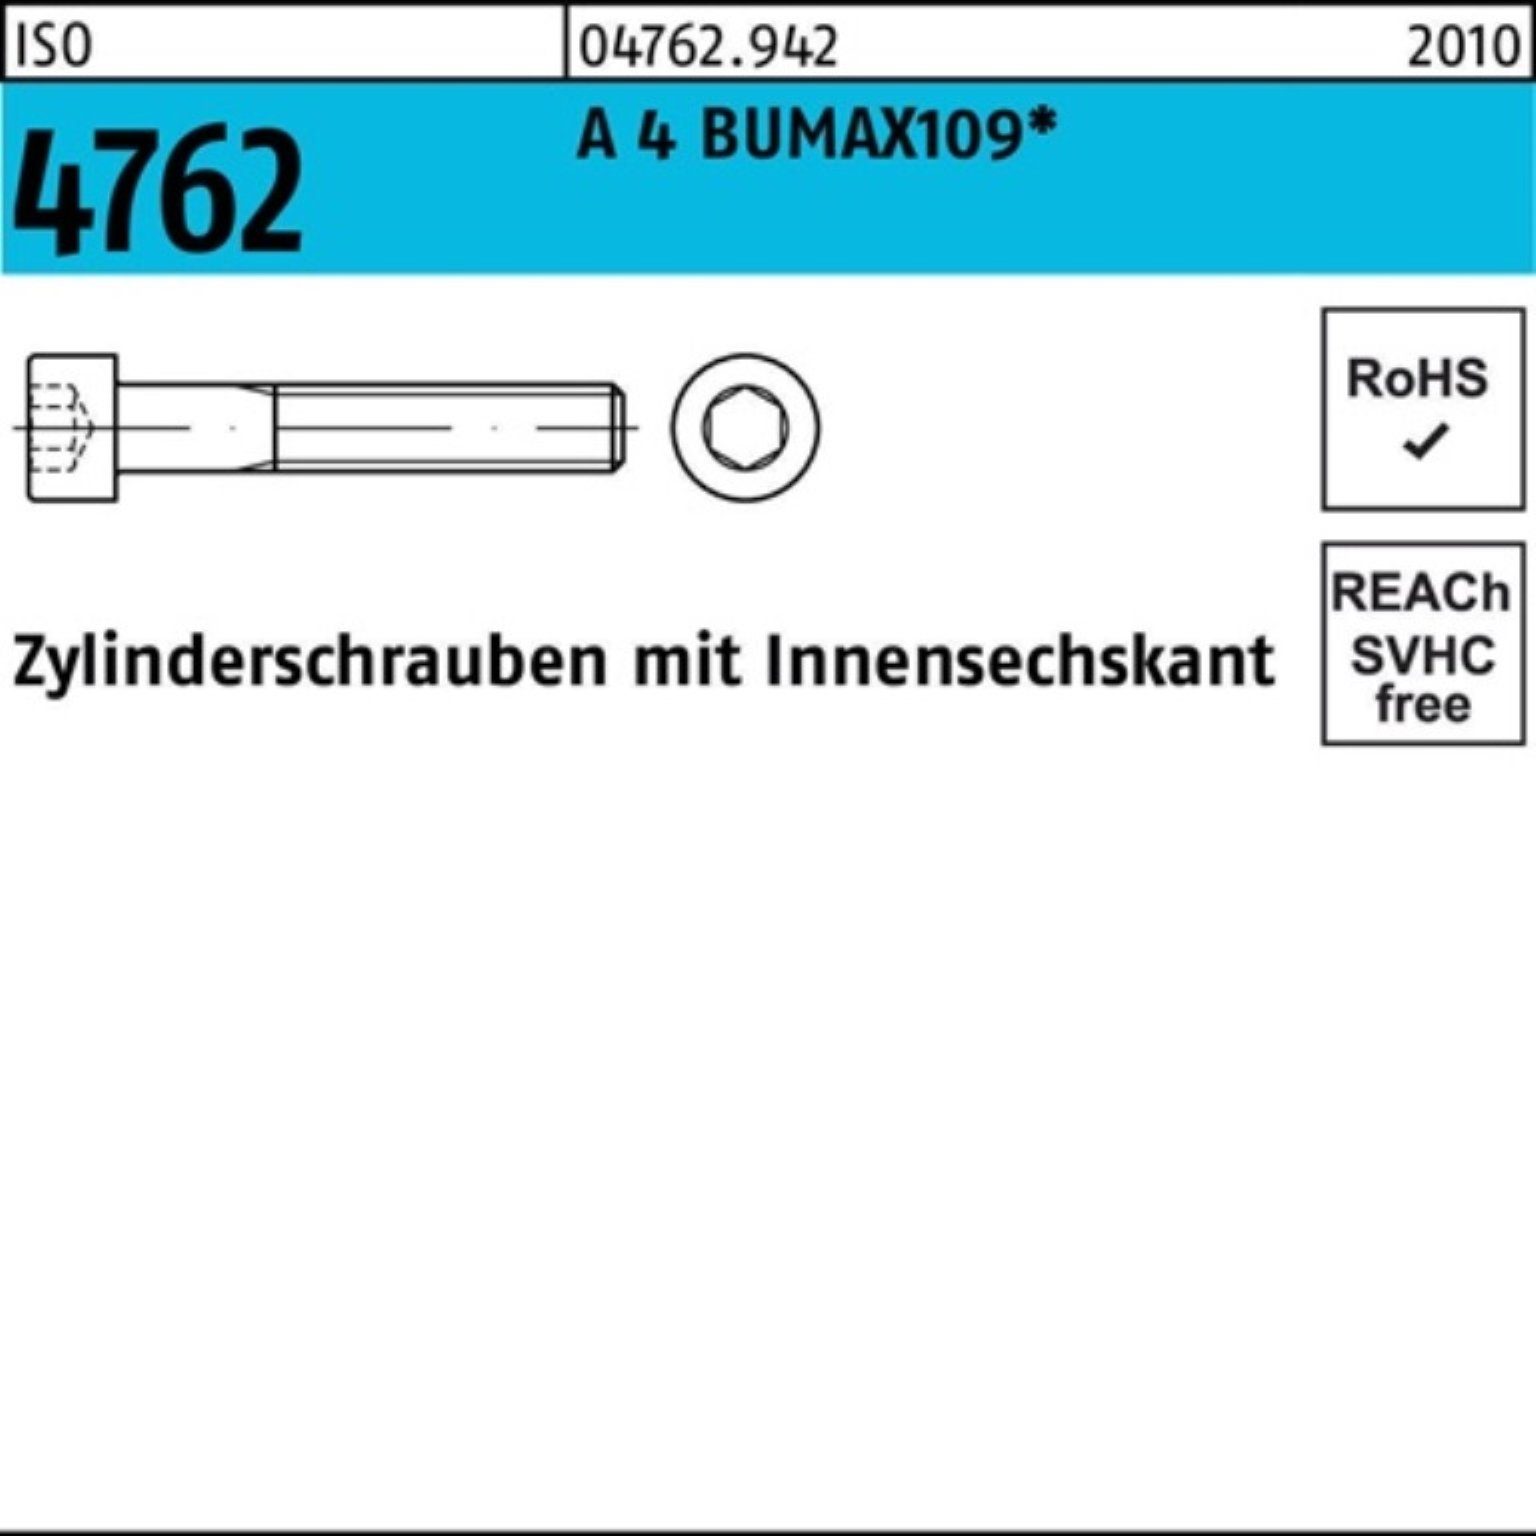 Bufab Zylinderschraube 100er Pack BUMAX109 Innen-6kt M12x 25 Zylinderschraube 4 A ISO 4762 50